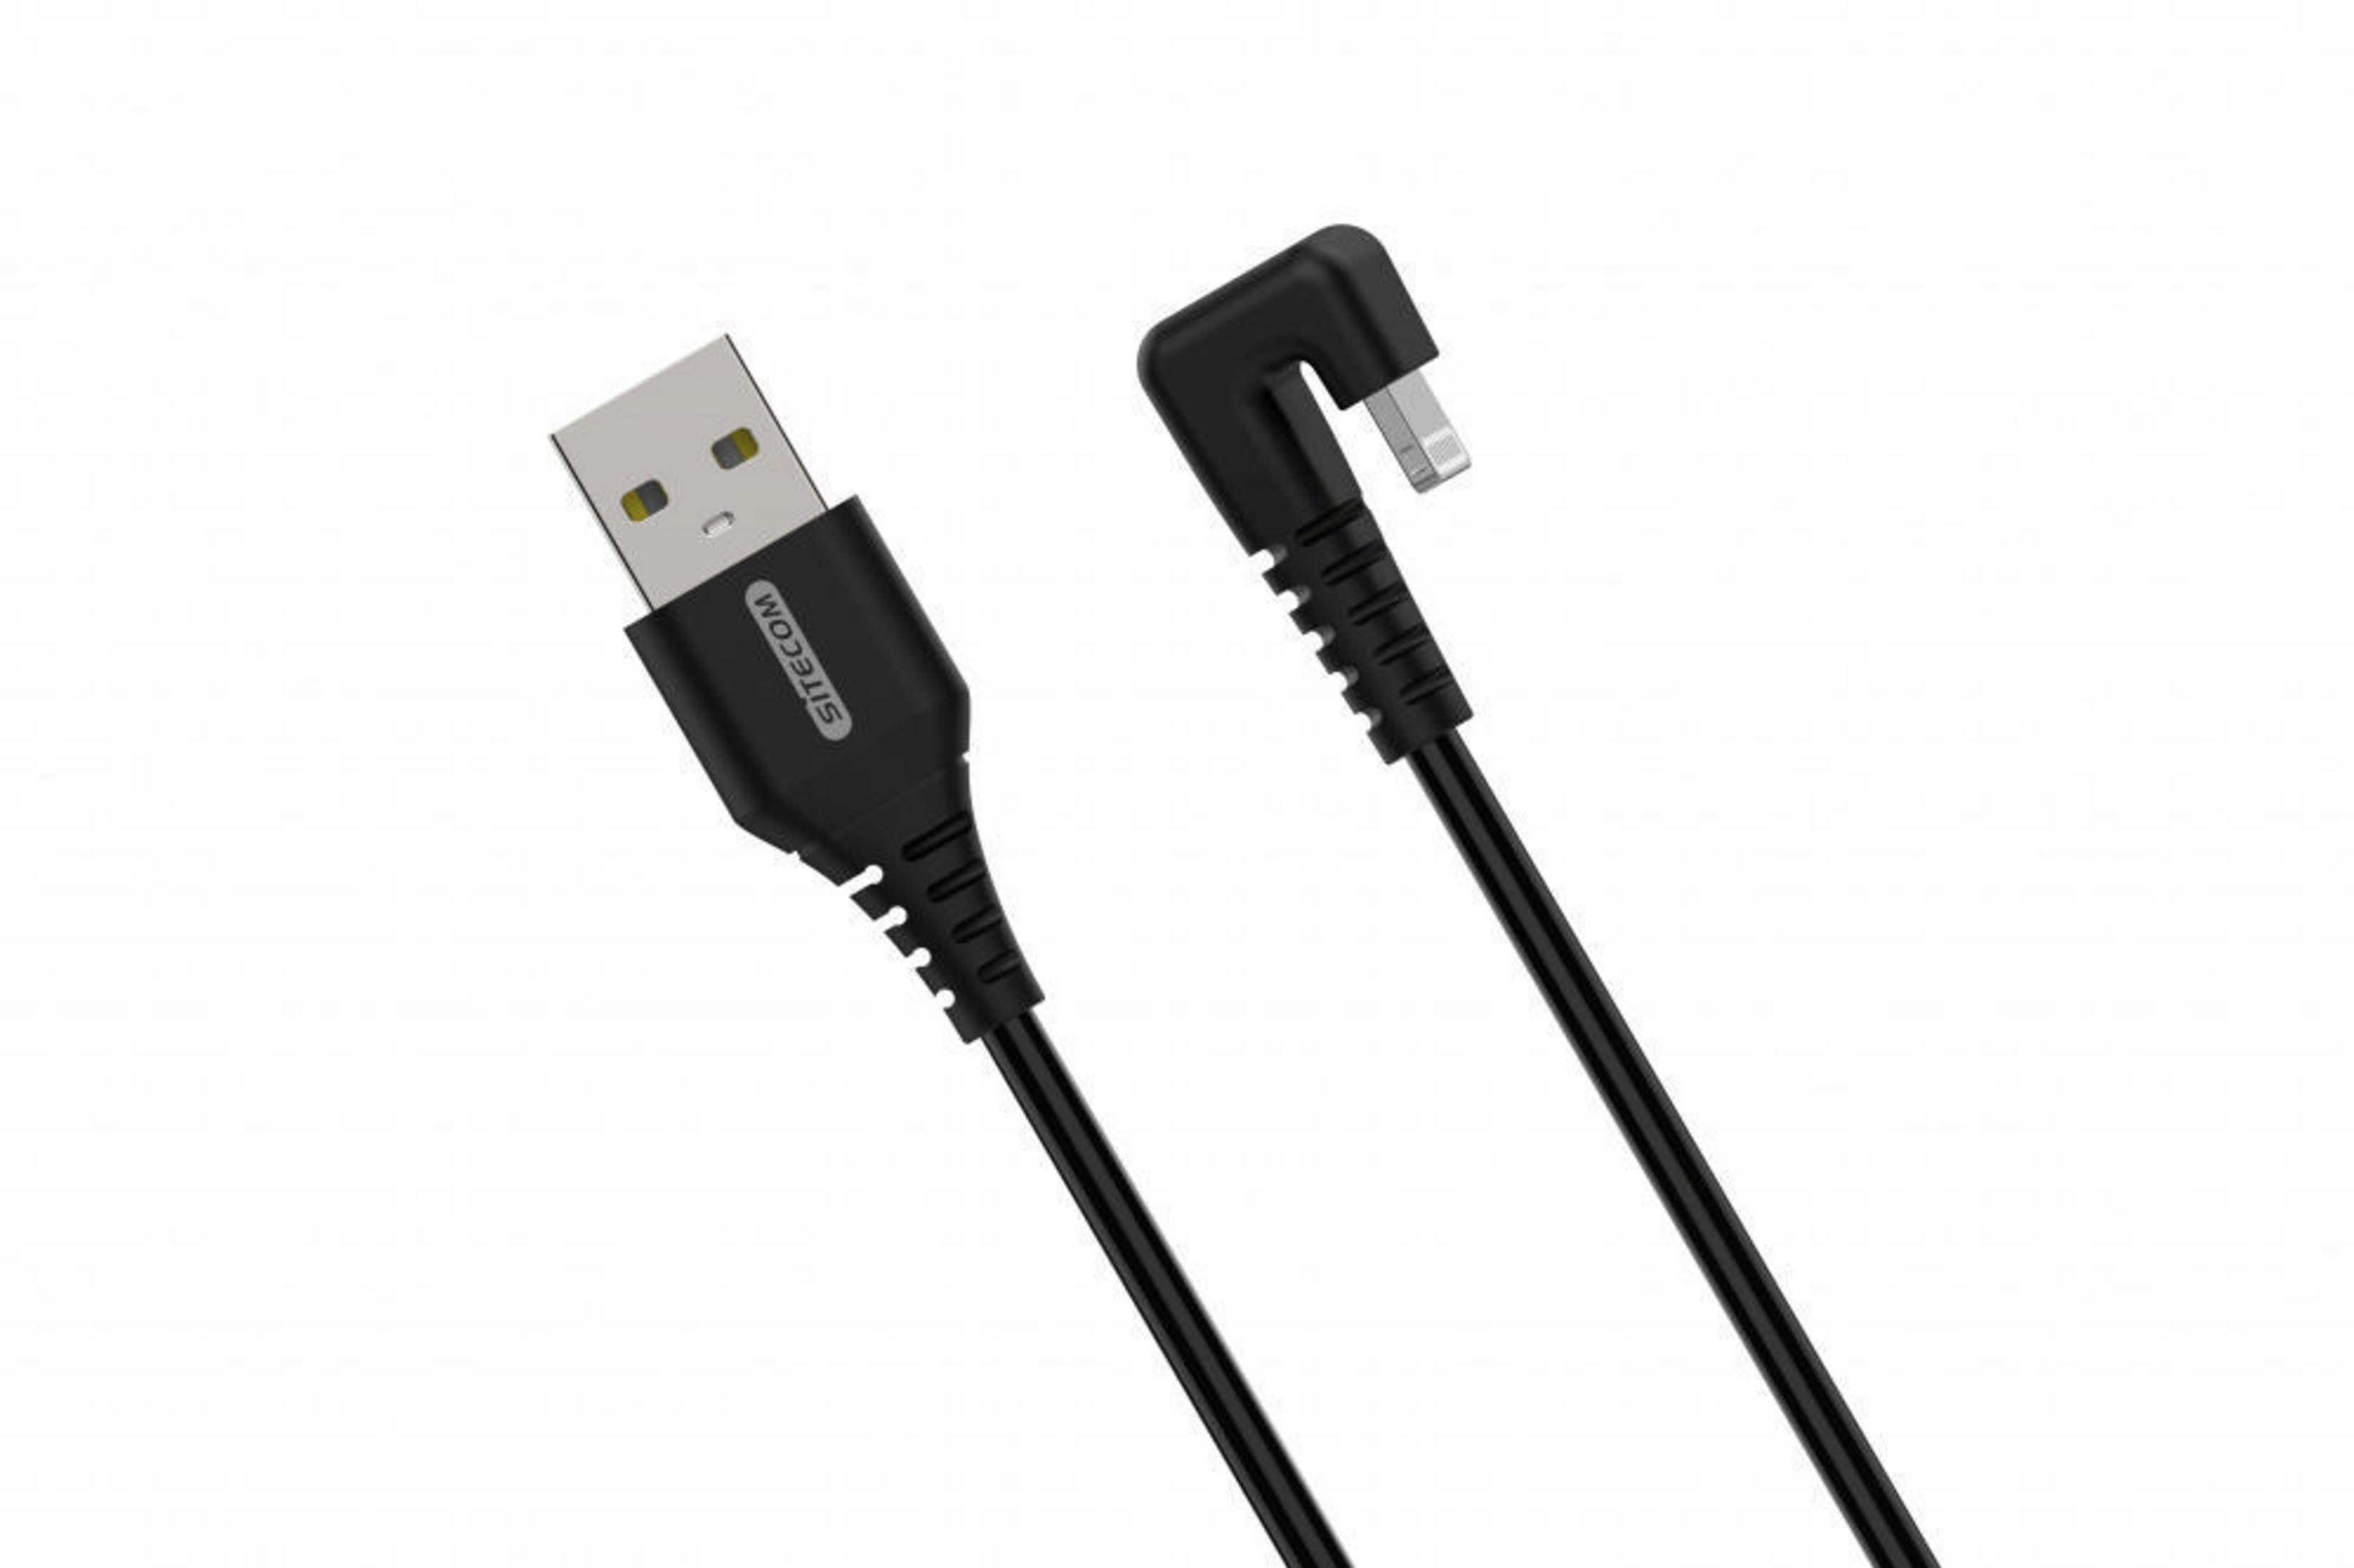 TO SITECOM Lightning LIGHTN Kabel, Datensynchronisationskabel 2.0 Lade- CA-039 GAME USB USB-A und